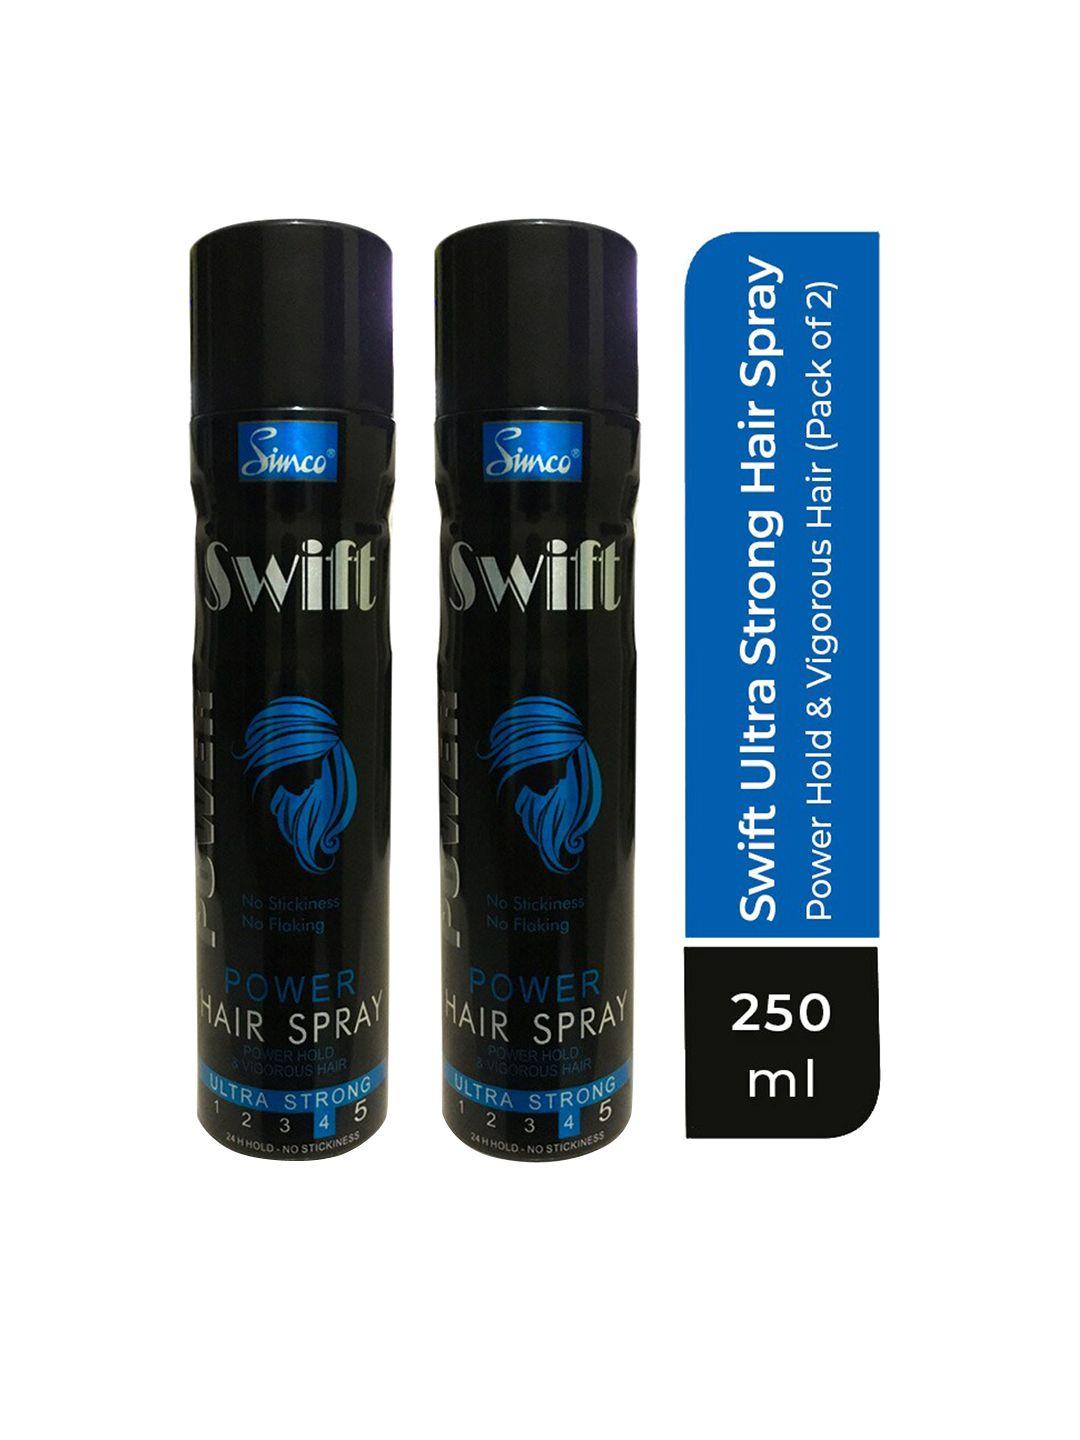 simco-set-of-2-swift-ultra-strong-power-hair-spray-250-ml